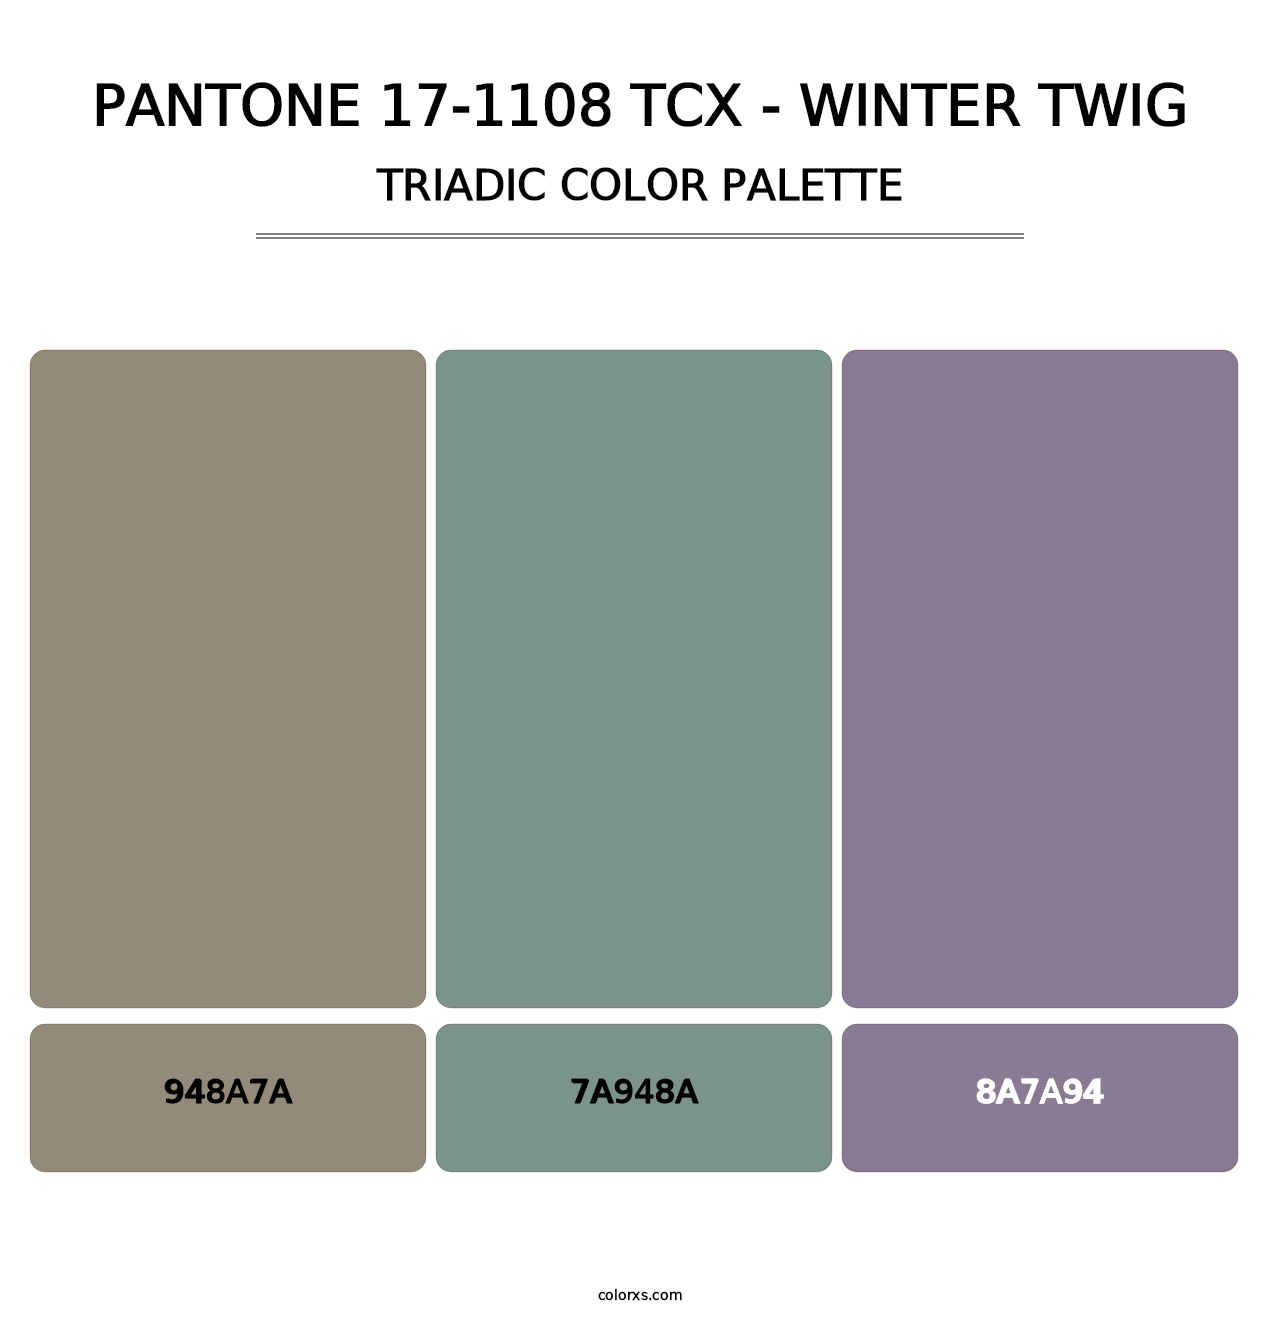 PANTONE 17-1108 TCX - Winter Twig - Triadic Color Palette